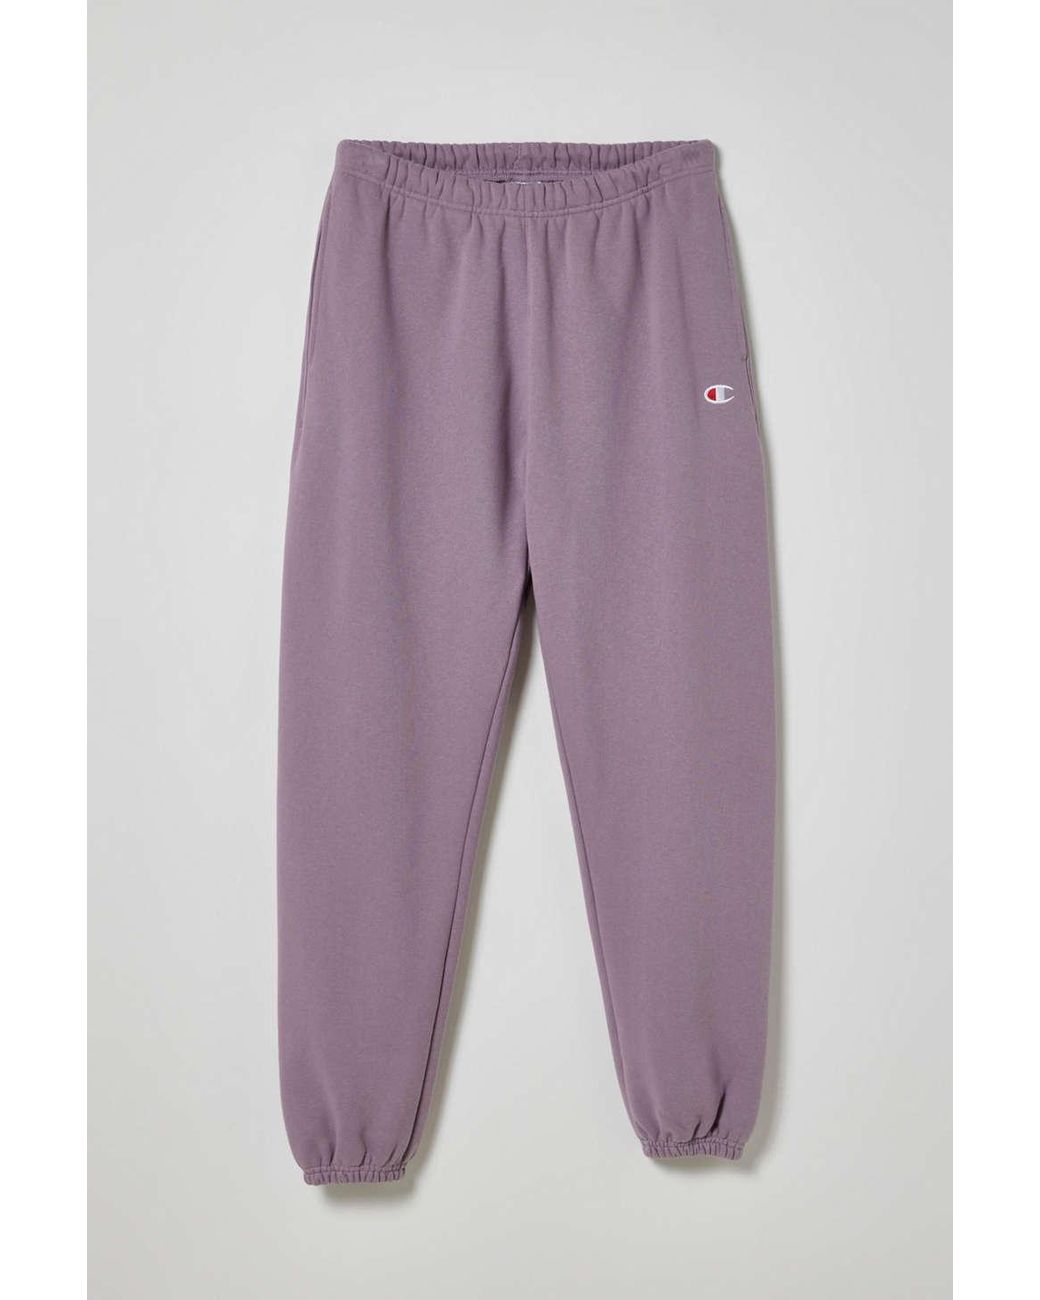 Champion Reverse Weave Joggers, Urban Lilac, Small C Logo, Women's  Sweatpants